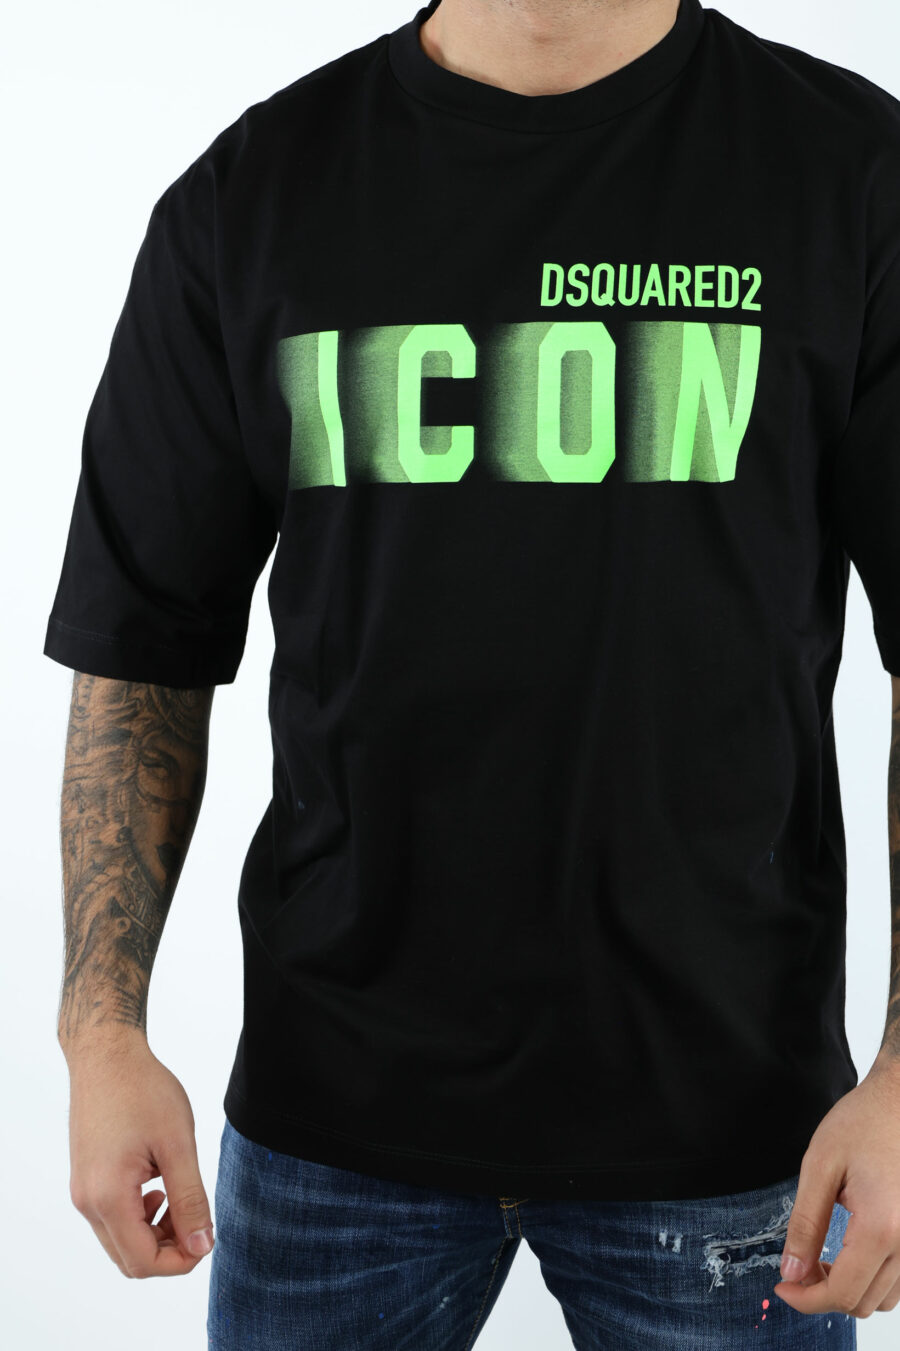 T-shirt oversize preta com maxilogo "icon" esbatido verde néon - 106933